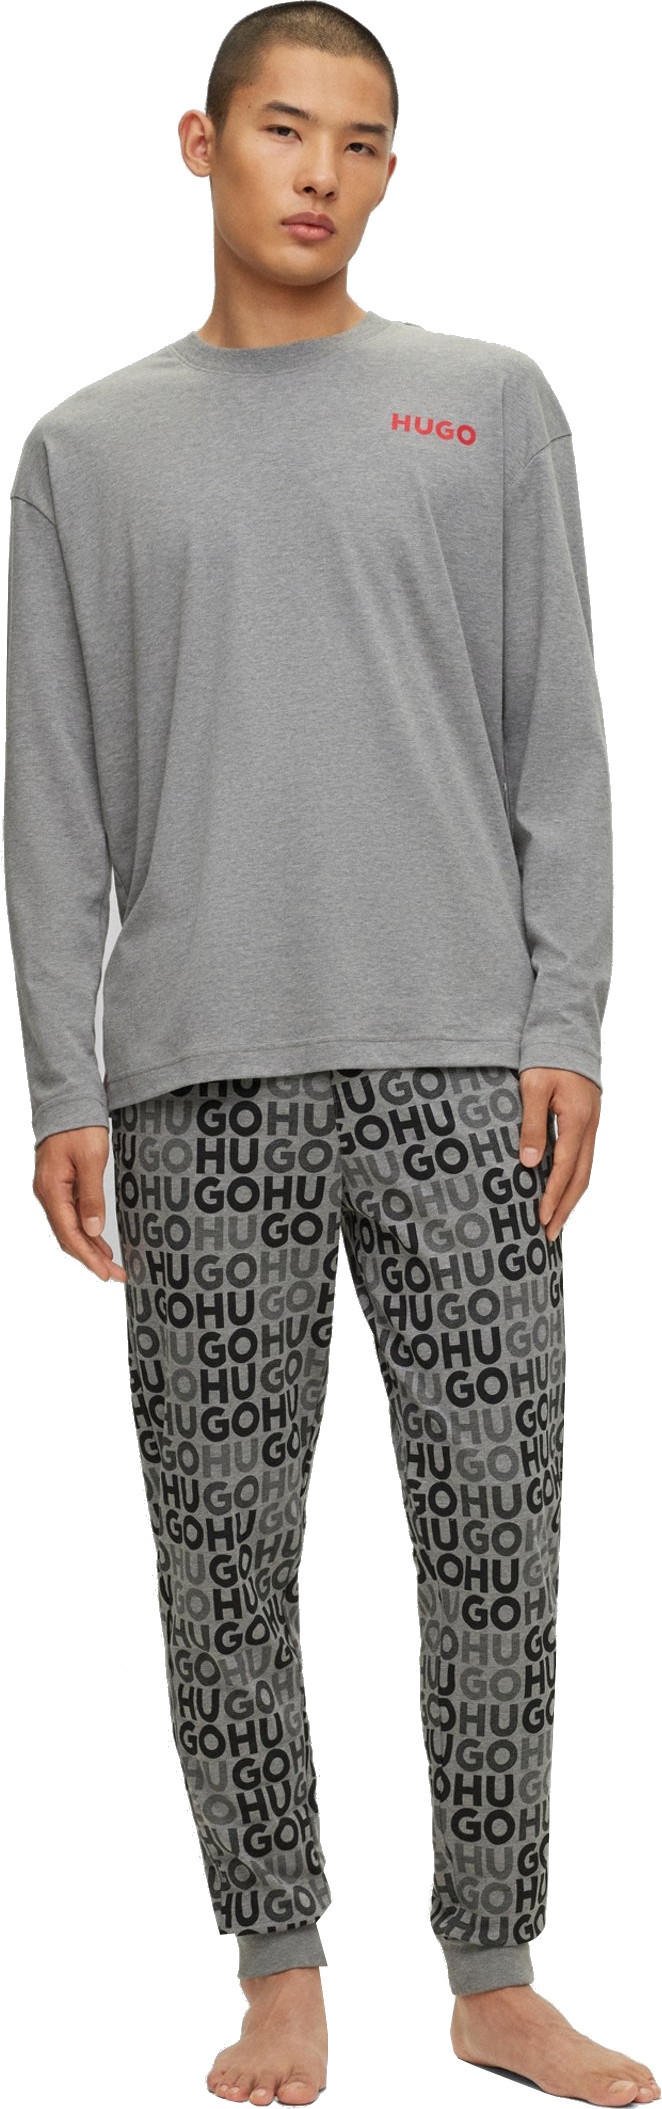 Hugo Boss Pánské pyžamo HUGO Comfort Fit 50501680-060 M